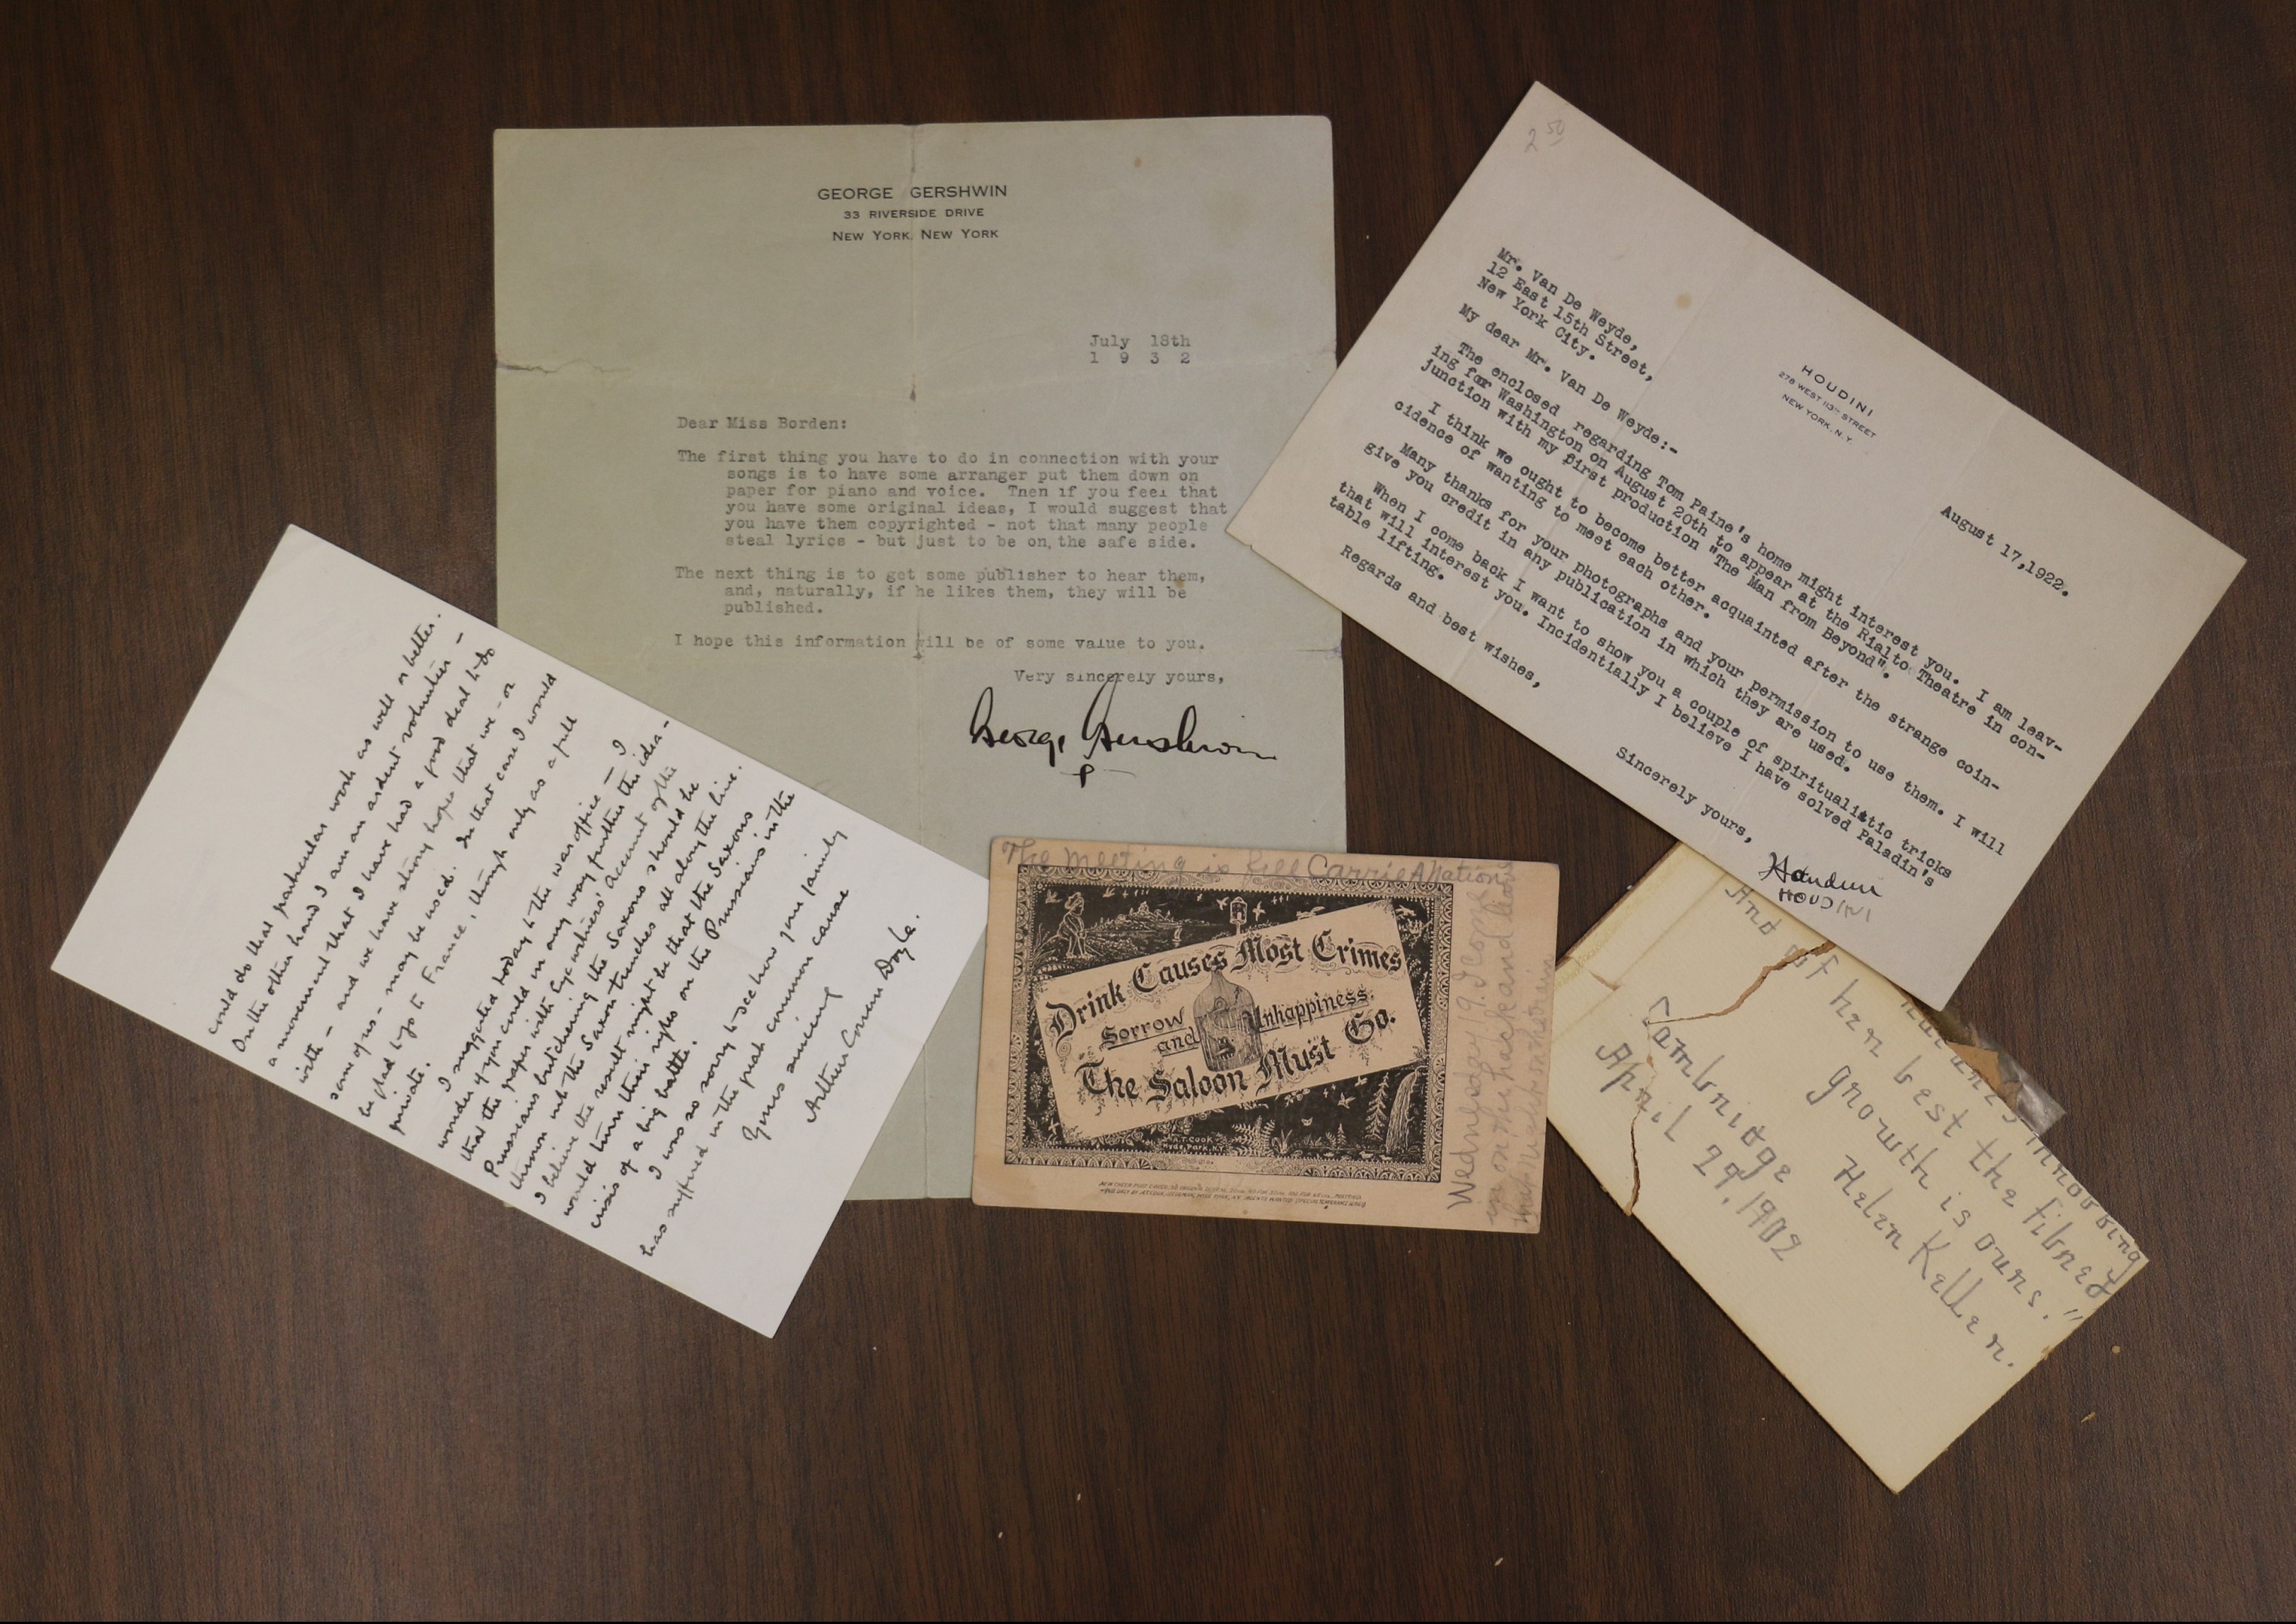 signatures for Arthur Conan Doyle, George Gershwin, Harry Houdini, Helen Keller, and Carrie Nation.